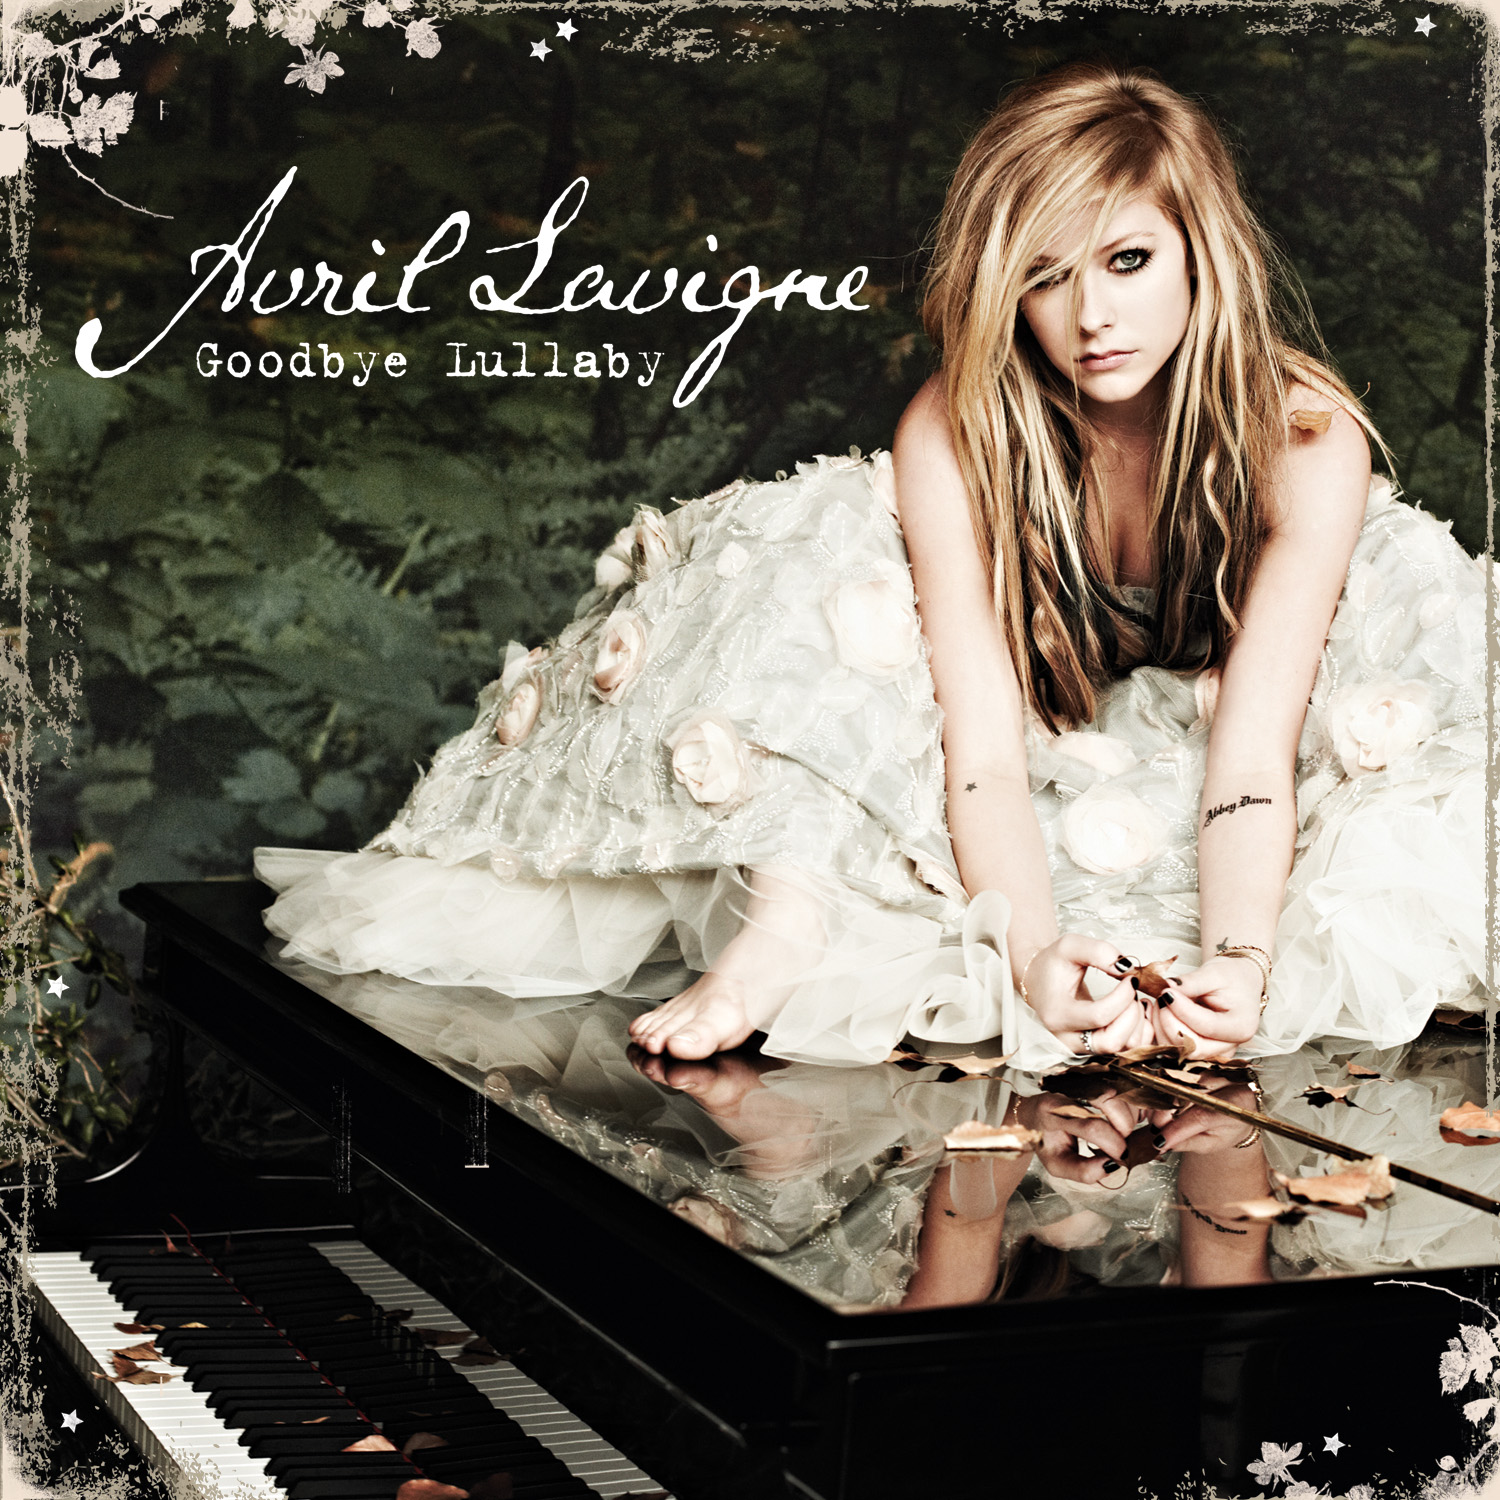 http://3.bp.blogspot.com/-XgUOG-hIMWo/TvNojeR8jYI/AAAAAAAAEFA/NzK1-TYqqik/s1600/Avril-Lavigne-Goodbye-Lullaby.jpg